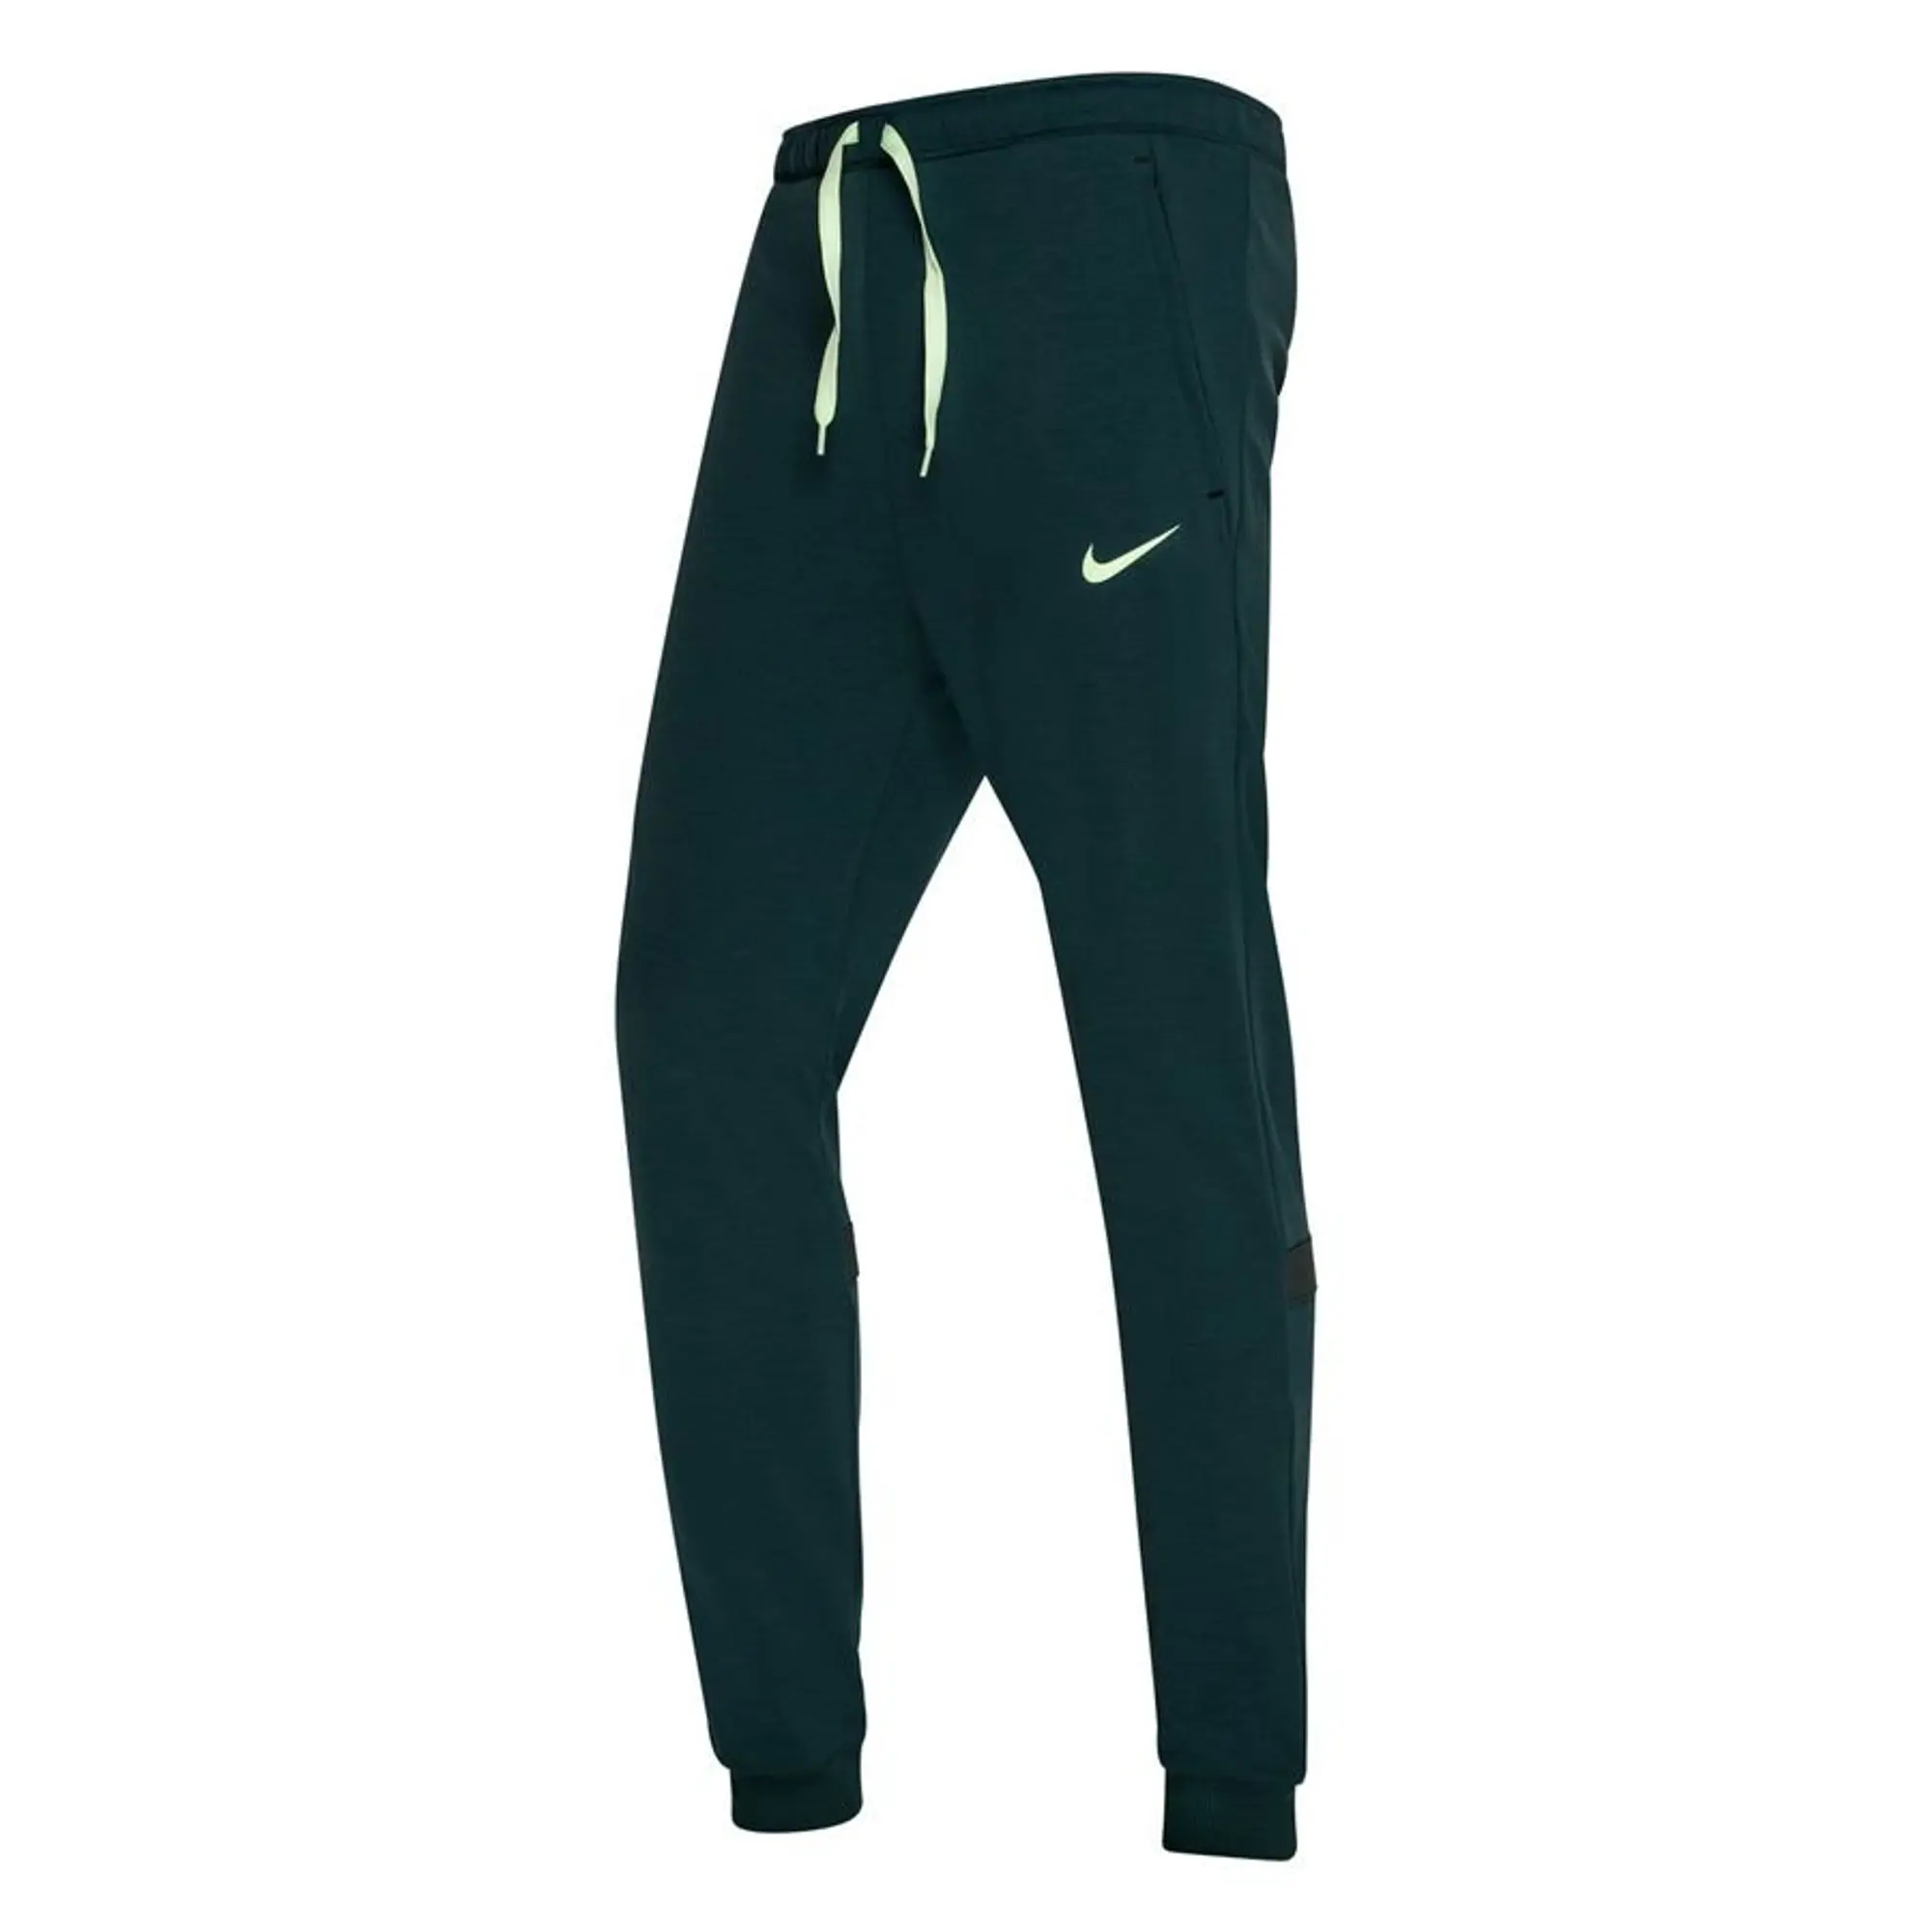 Nike Tottenham Hotspur Fleece Track Pants Mens - Green